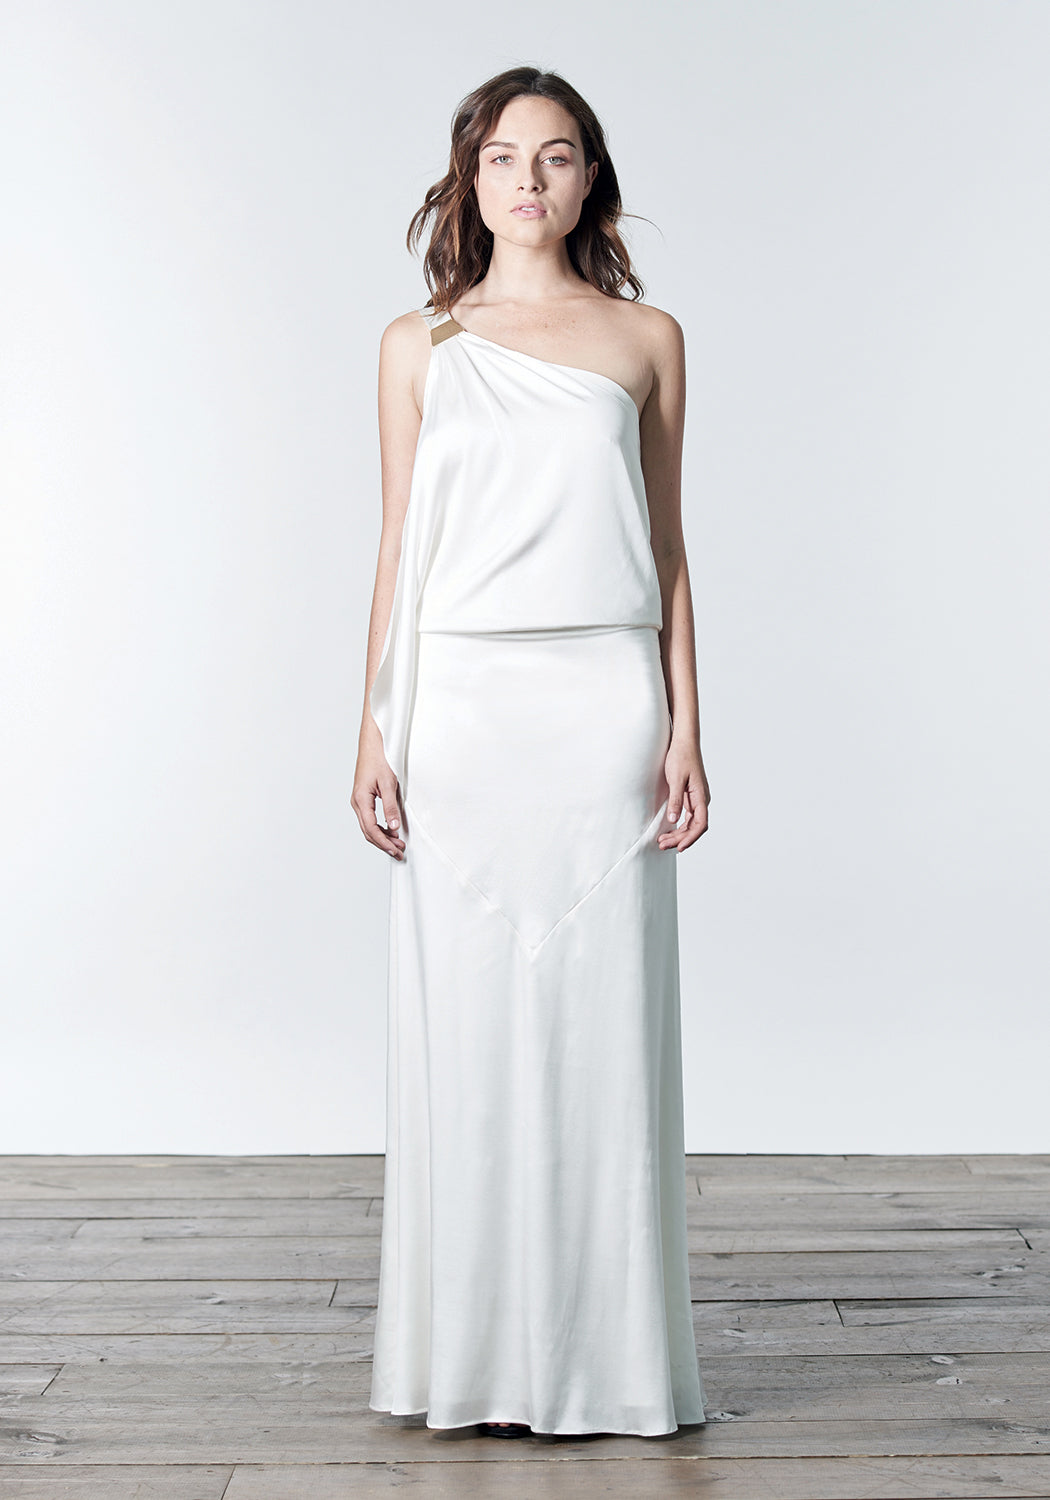 White, floor length, one-shoulder, stretch silk satin grecian bridesmaid dress gown.